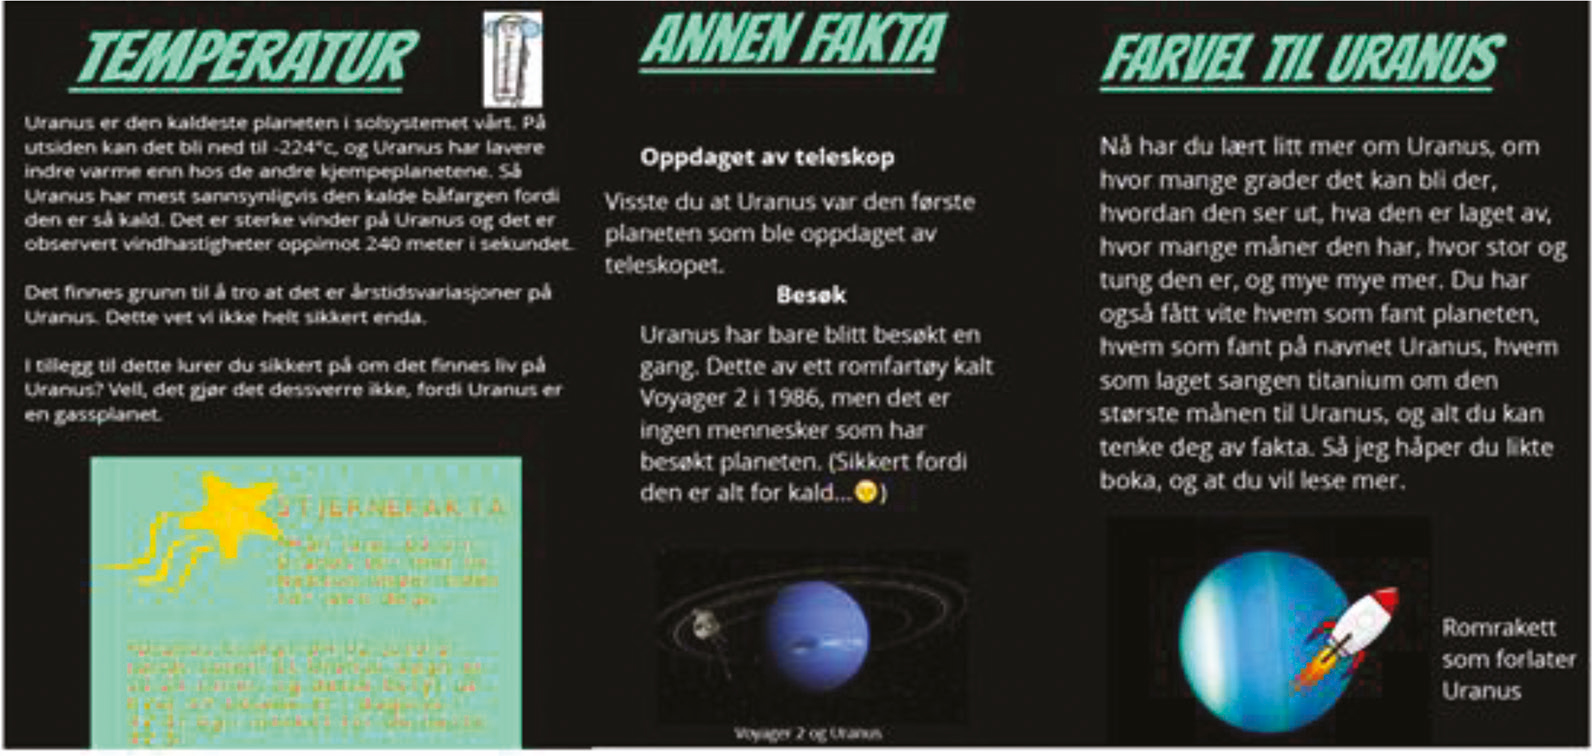 Figure 4. Excerpts from Nina’s book about Uranus.